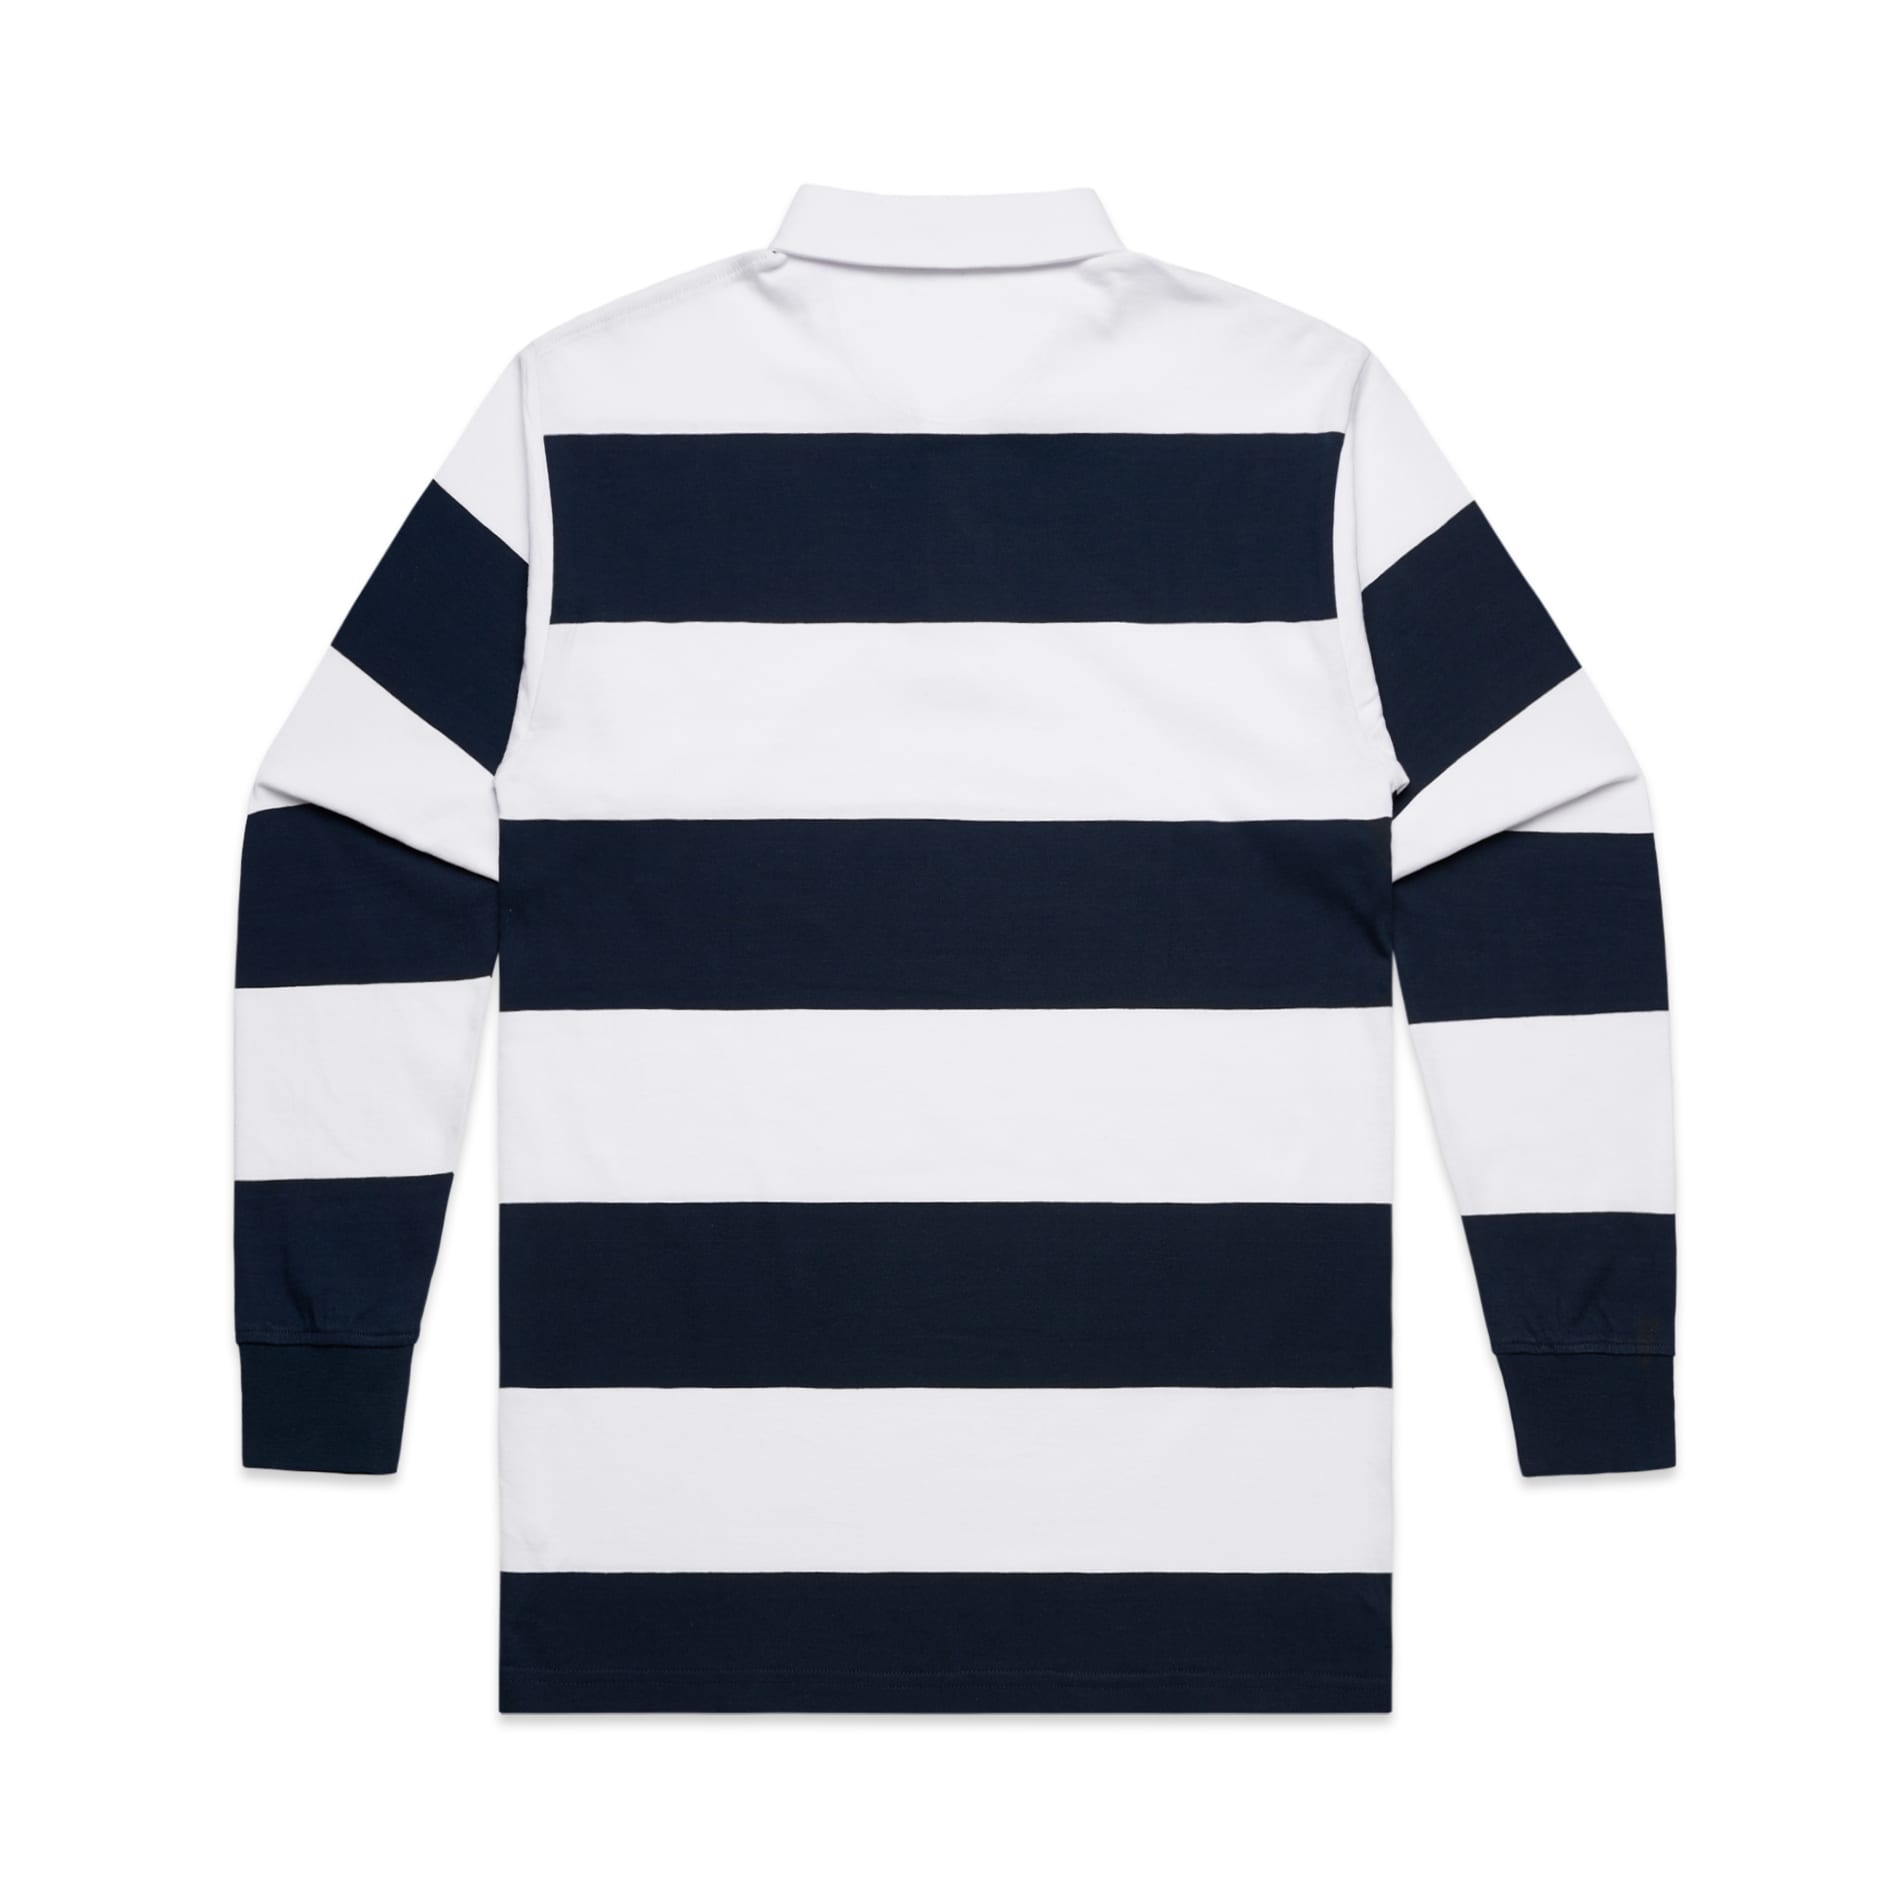 5416_rugby_stripe_white_navy_back.jpg